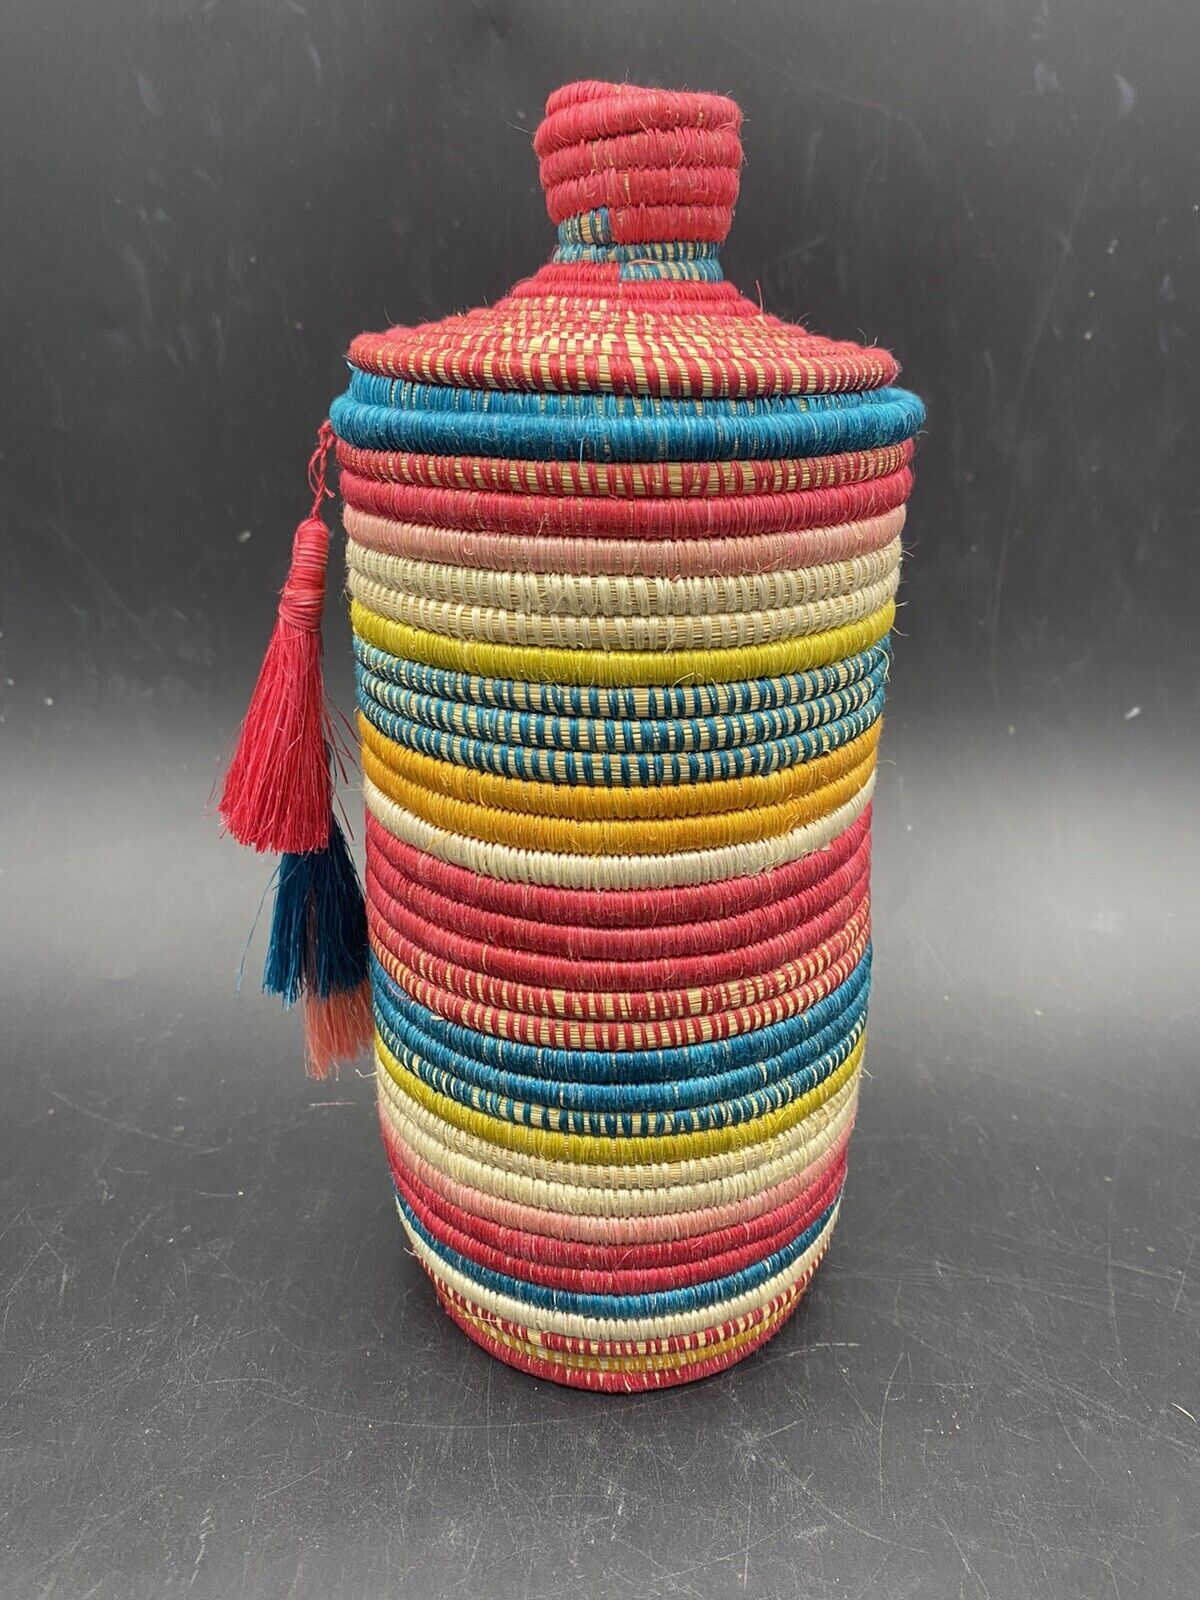 Coil Weave Basket Handmade Colorful Tassels Lidded Tall Coil Basket Made Rwanda